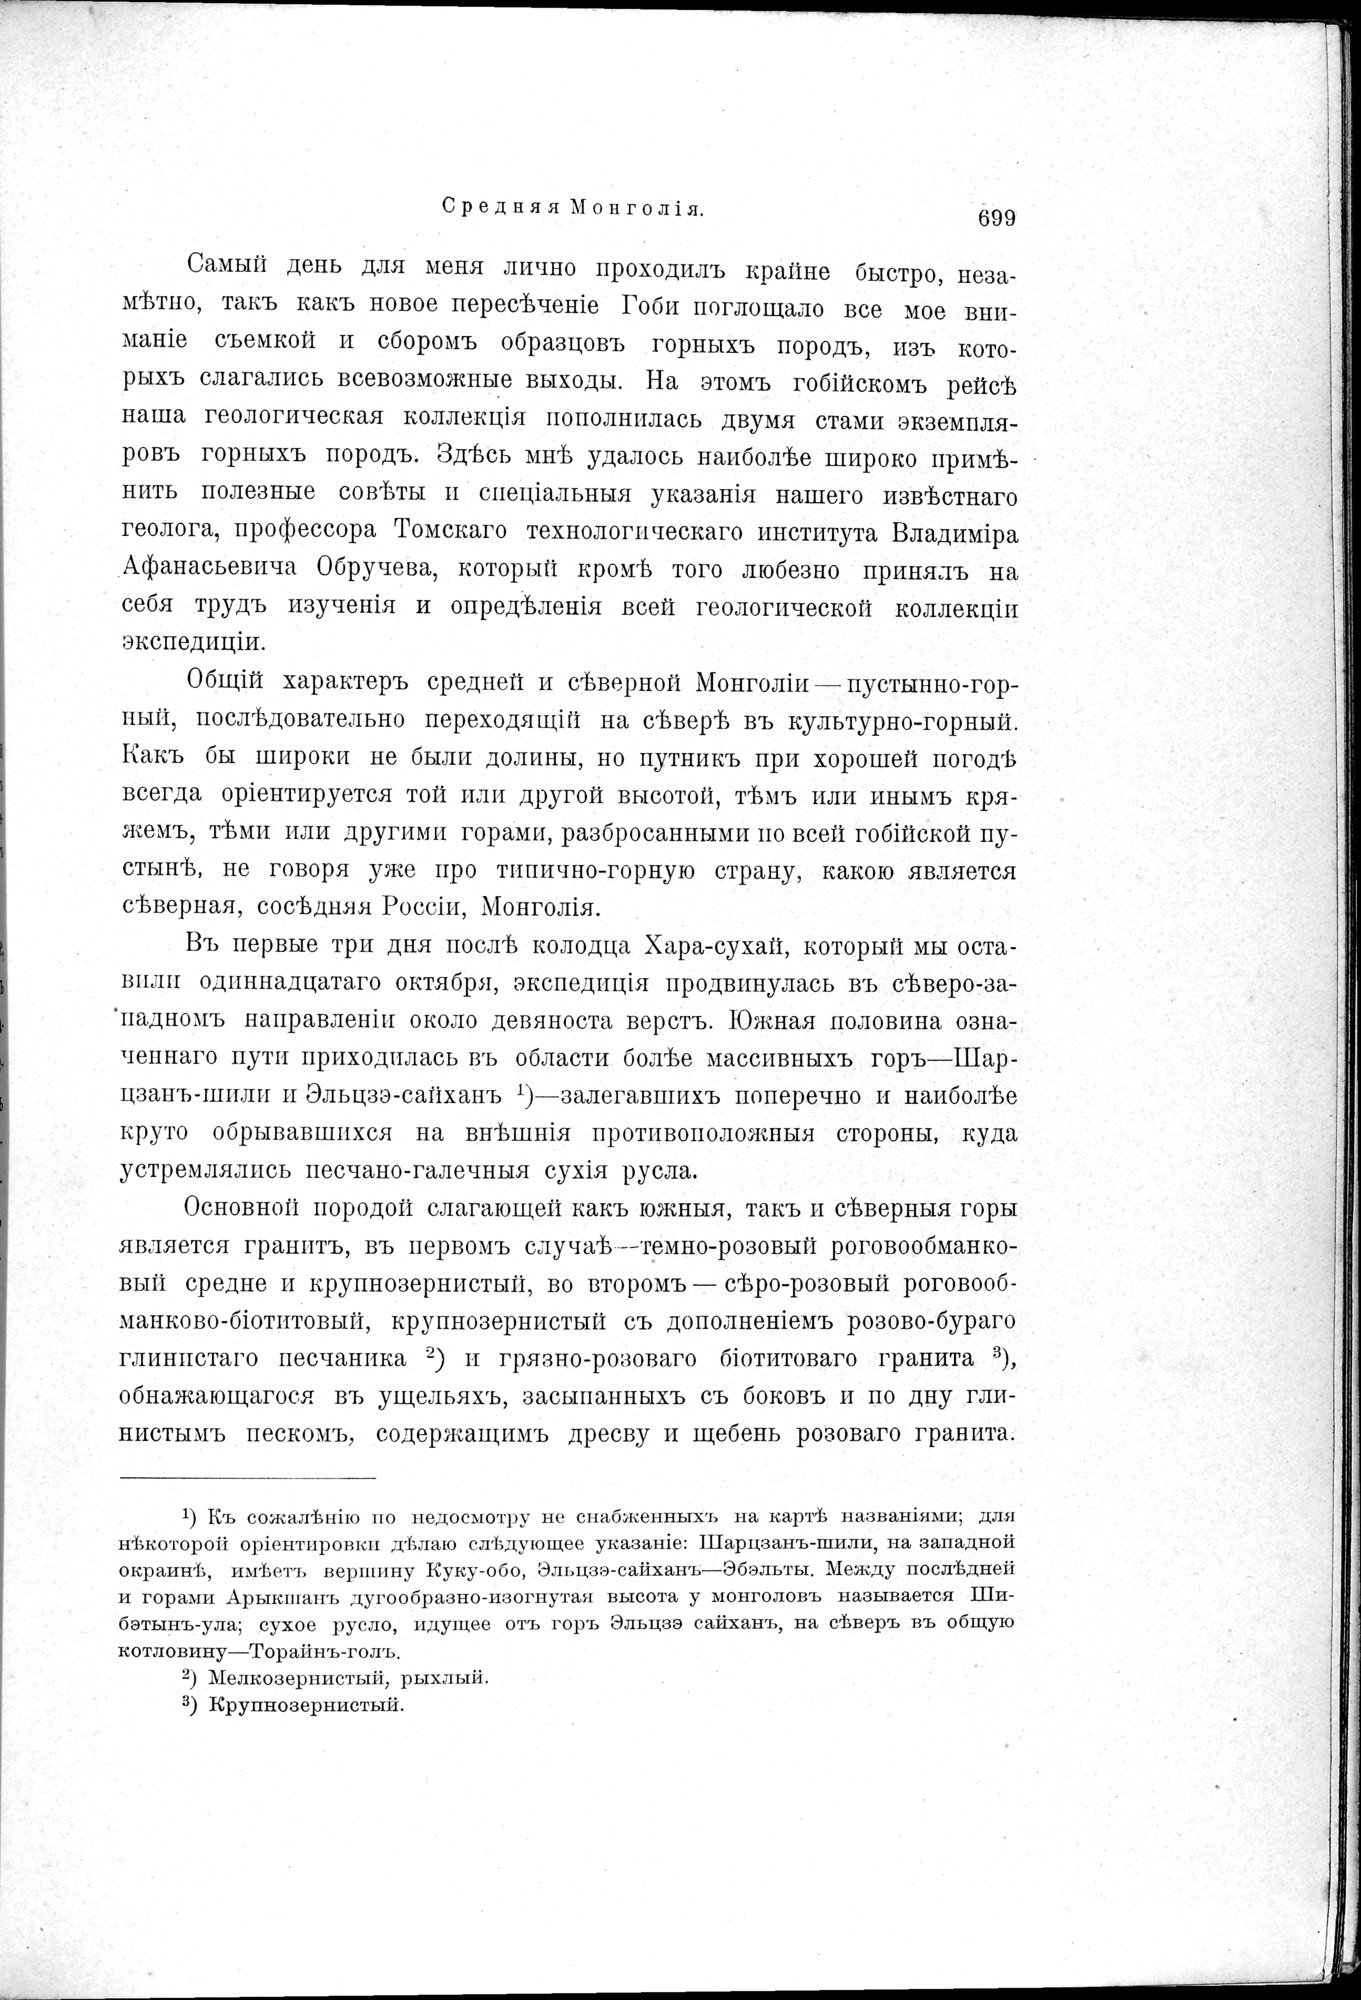 Mongoliia i Kam : vol.2 / Page 537 (Grayscale High Resolution Image)